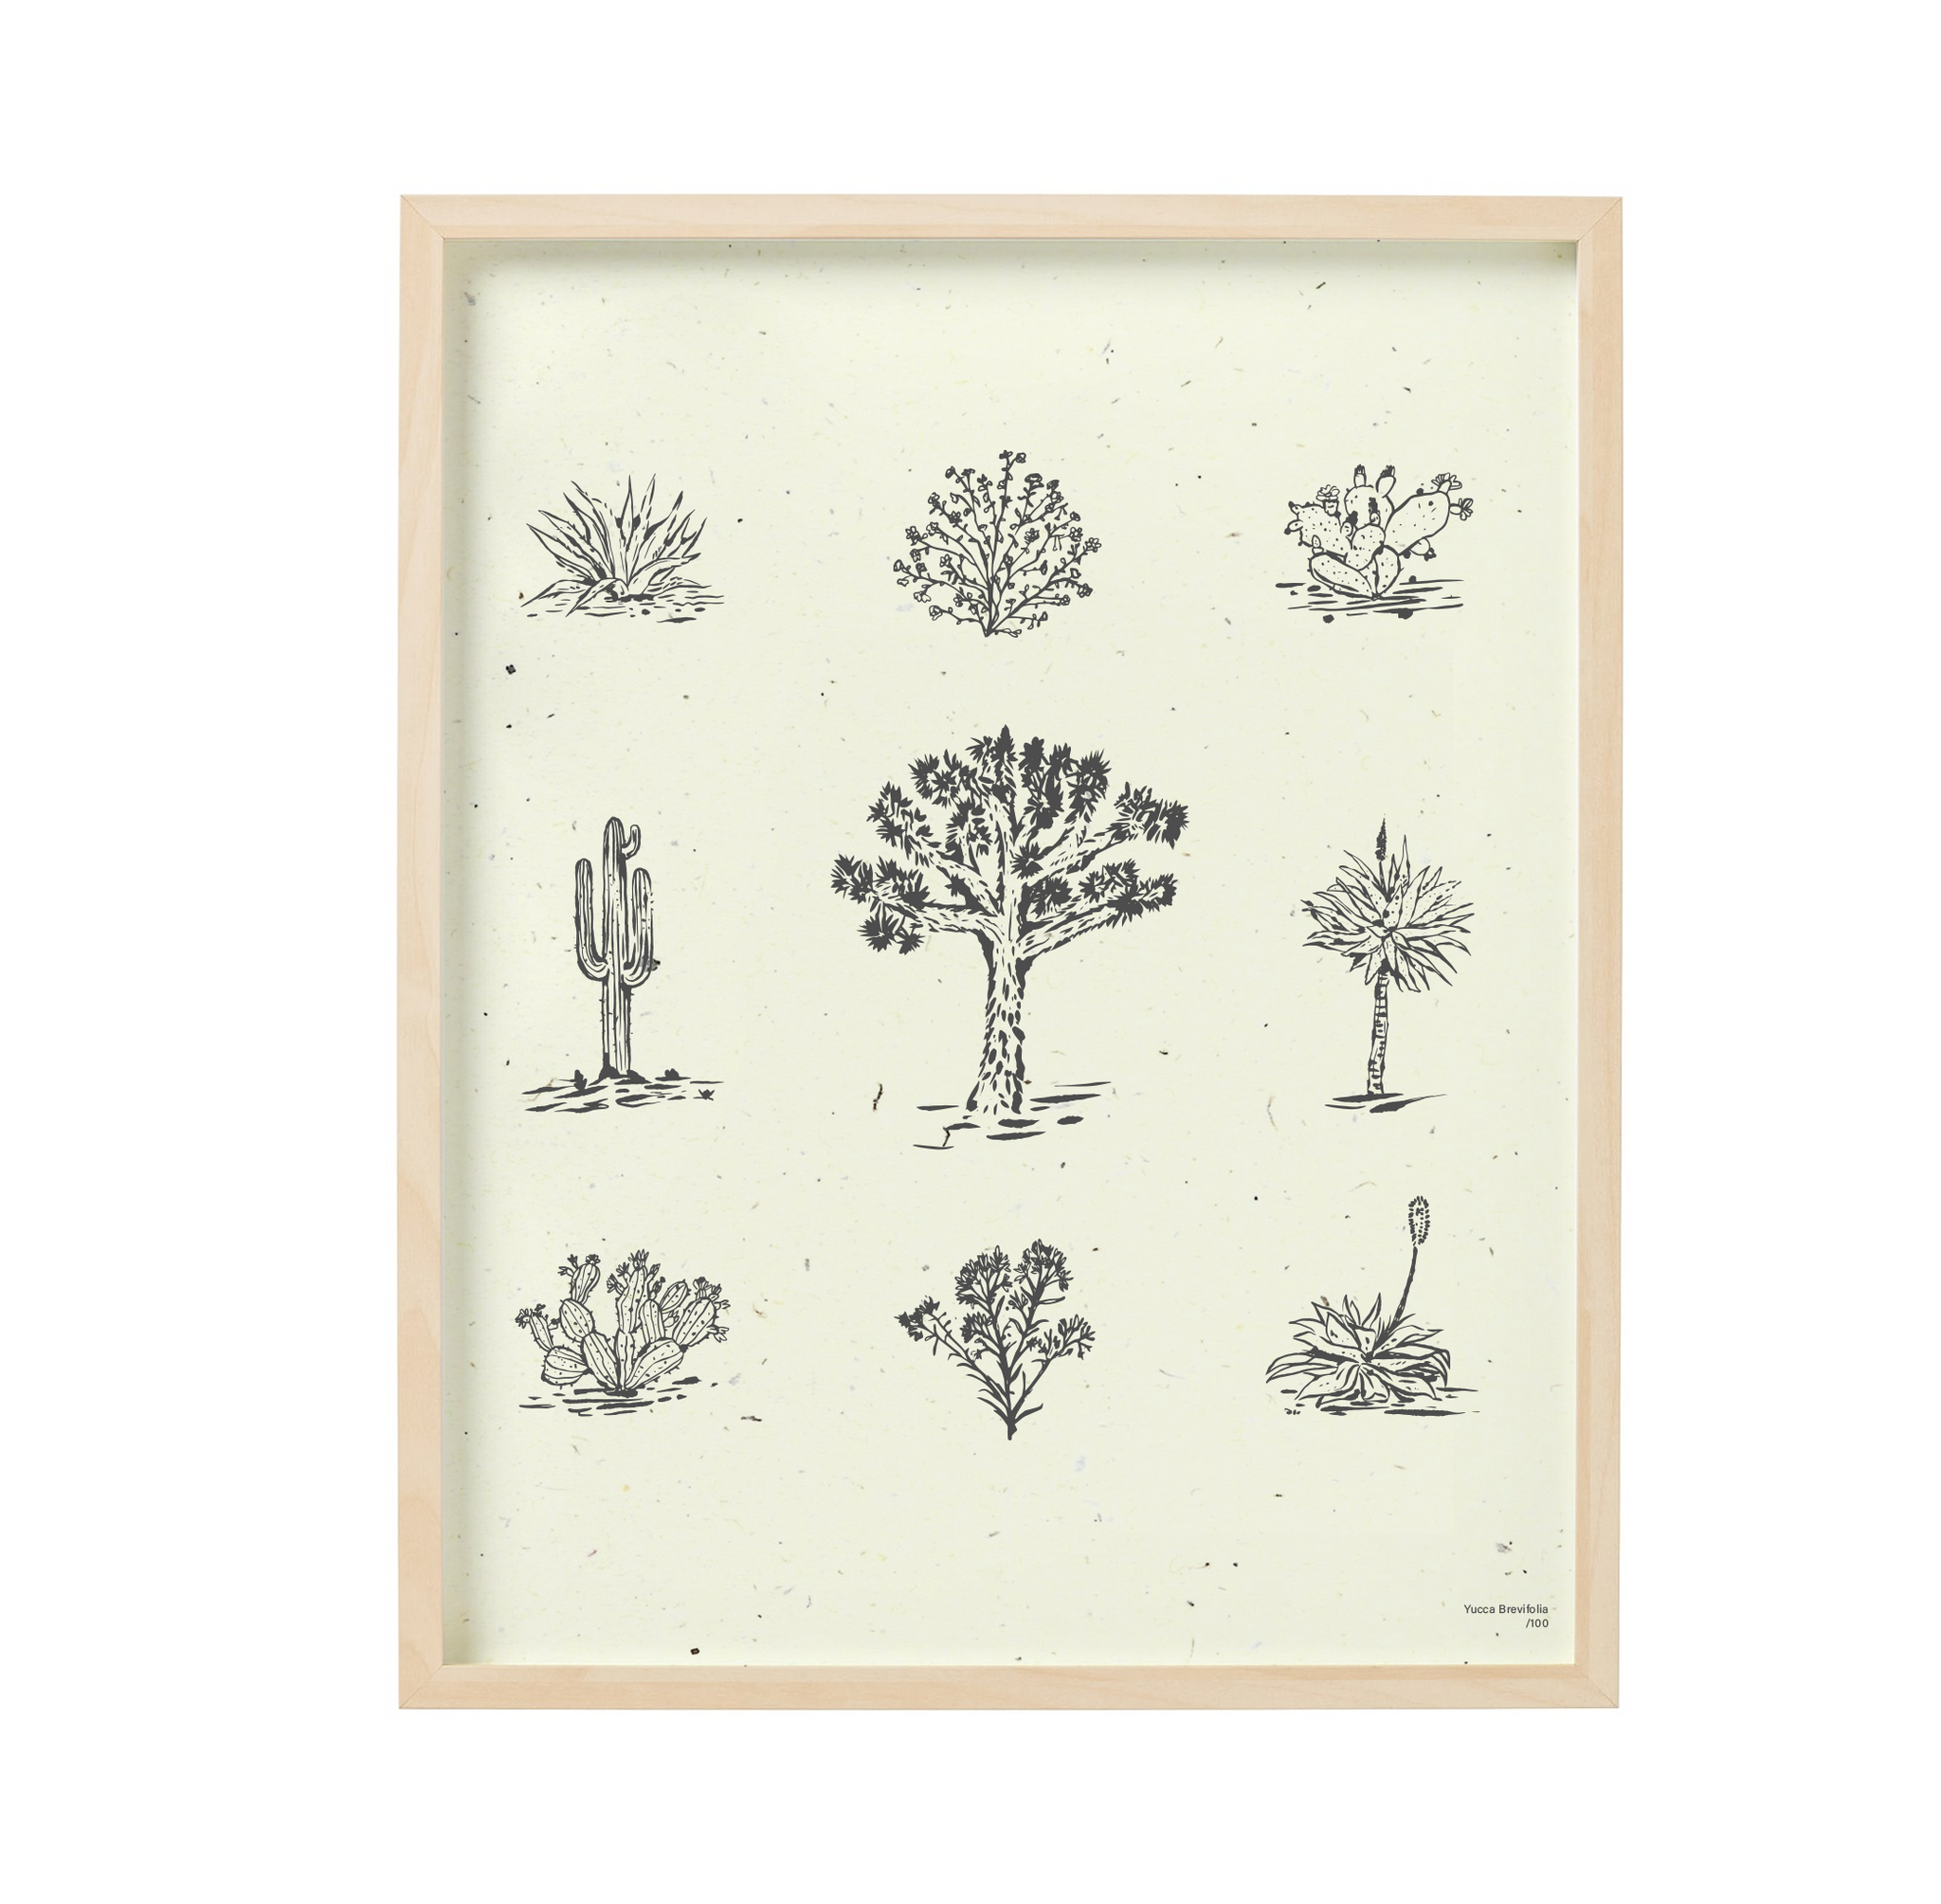 Object(s) Desert Flora Print